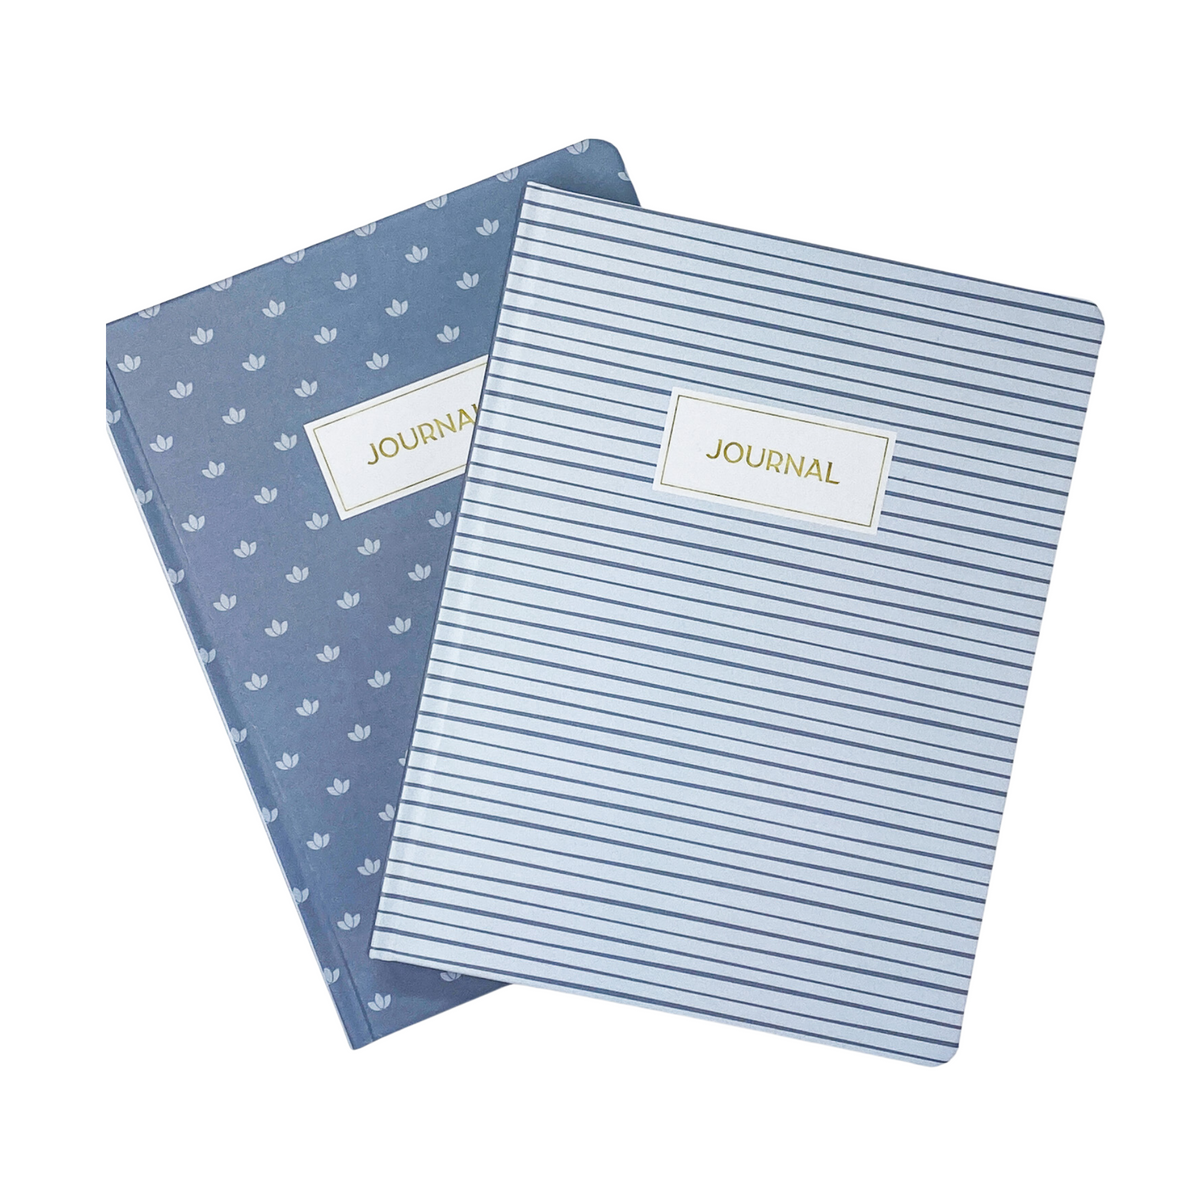 Journal - Stripes